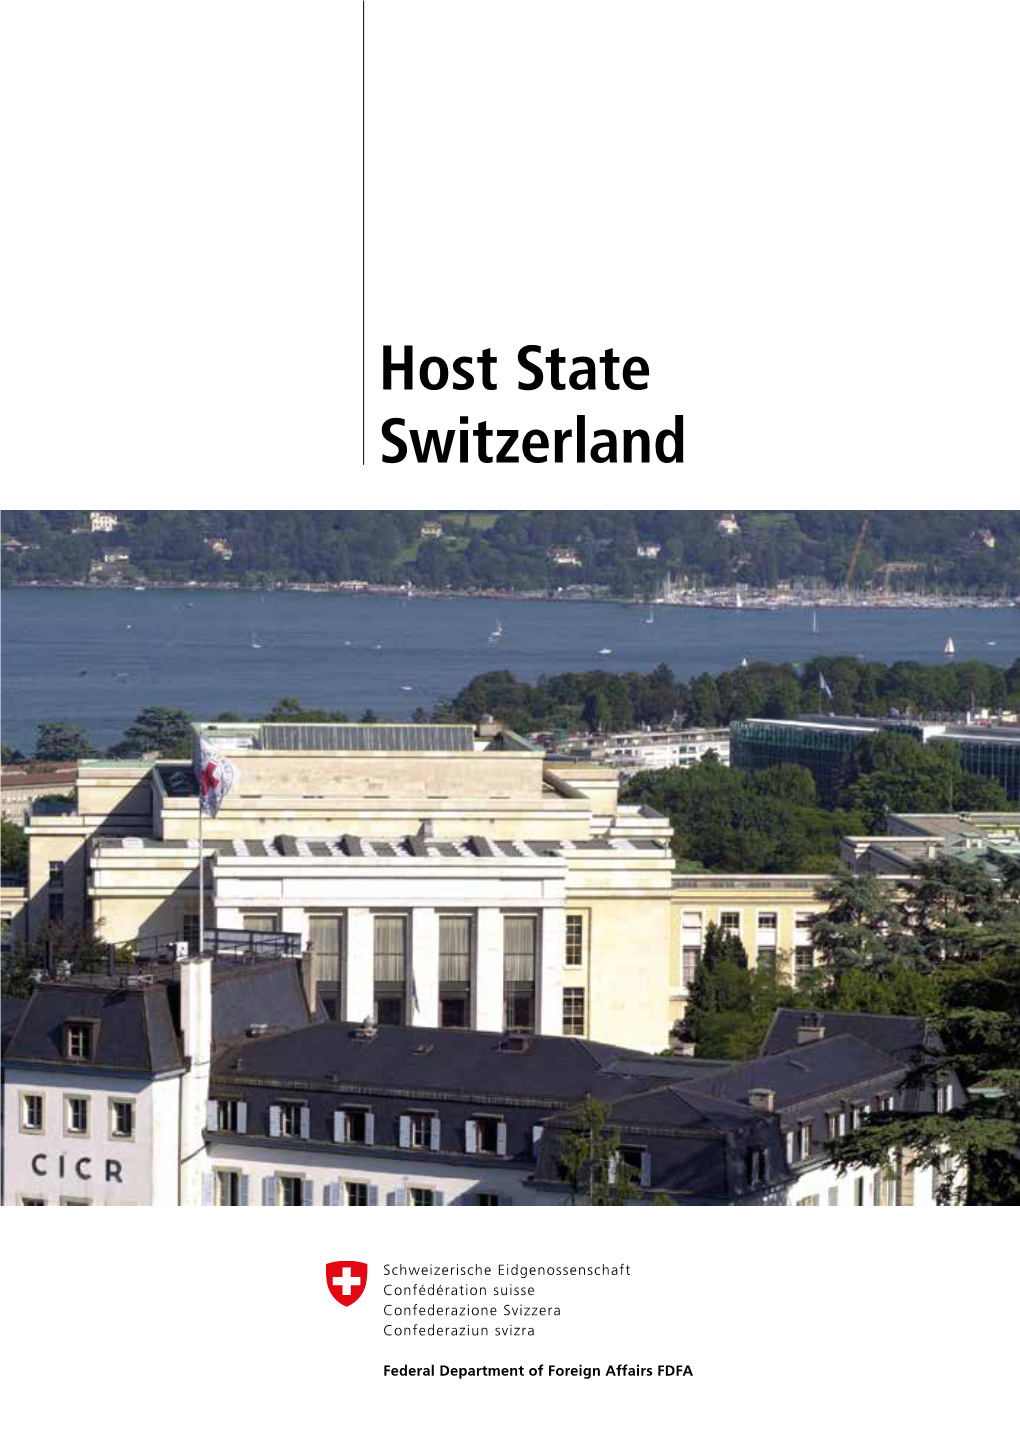 Host State Switzerland Contents